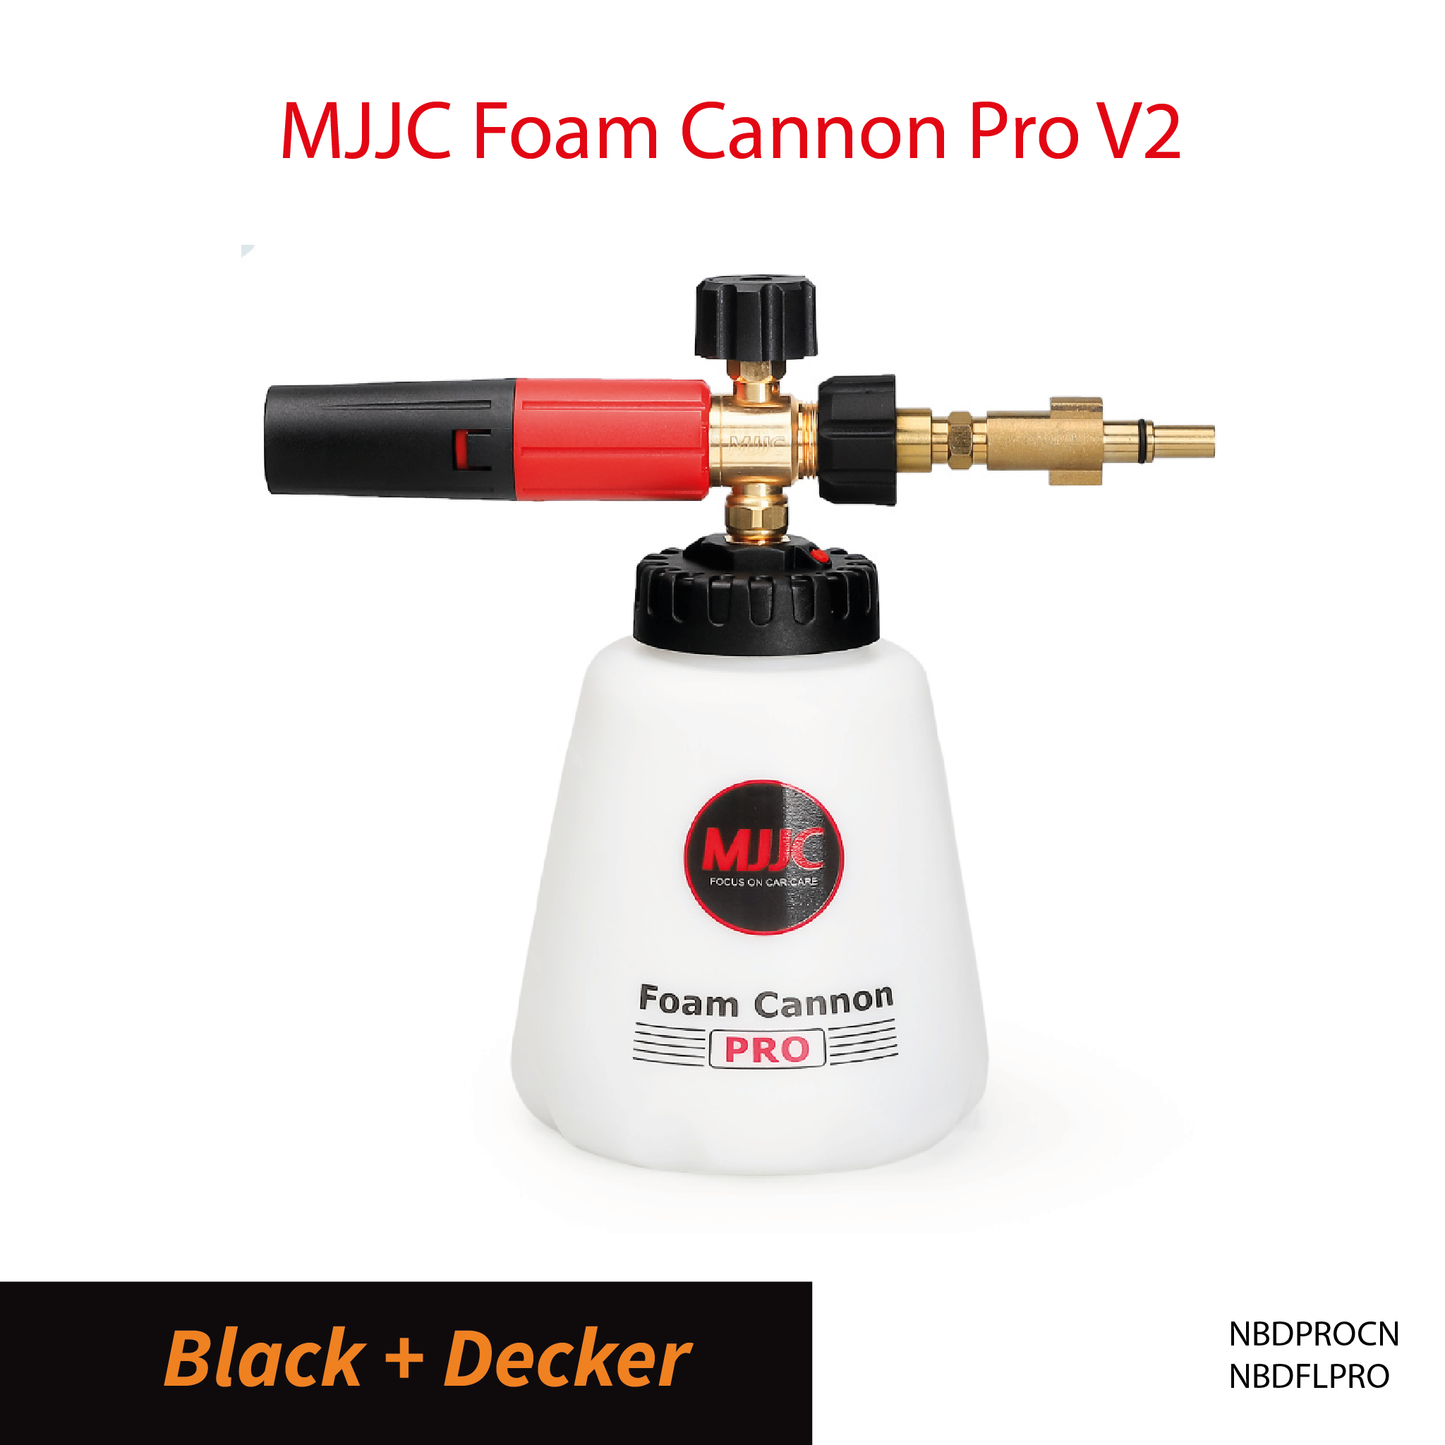 Black and Decker pressure washer - MJJC Foam Cannon Pro V2 (Pressure Washer Snow Foam Lance Gun)